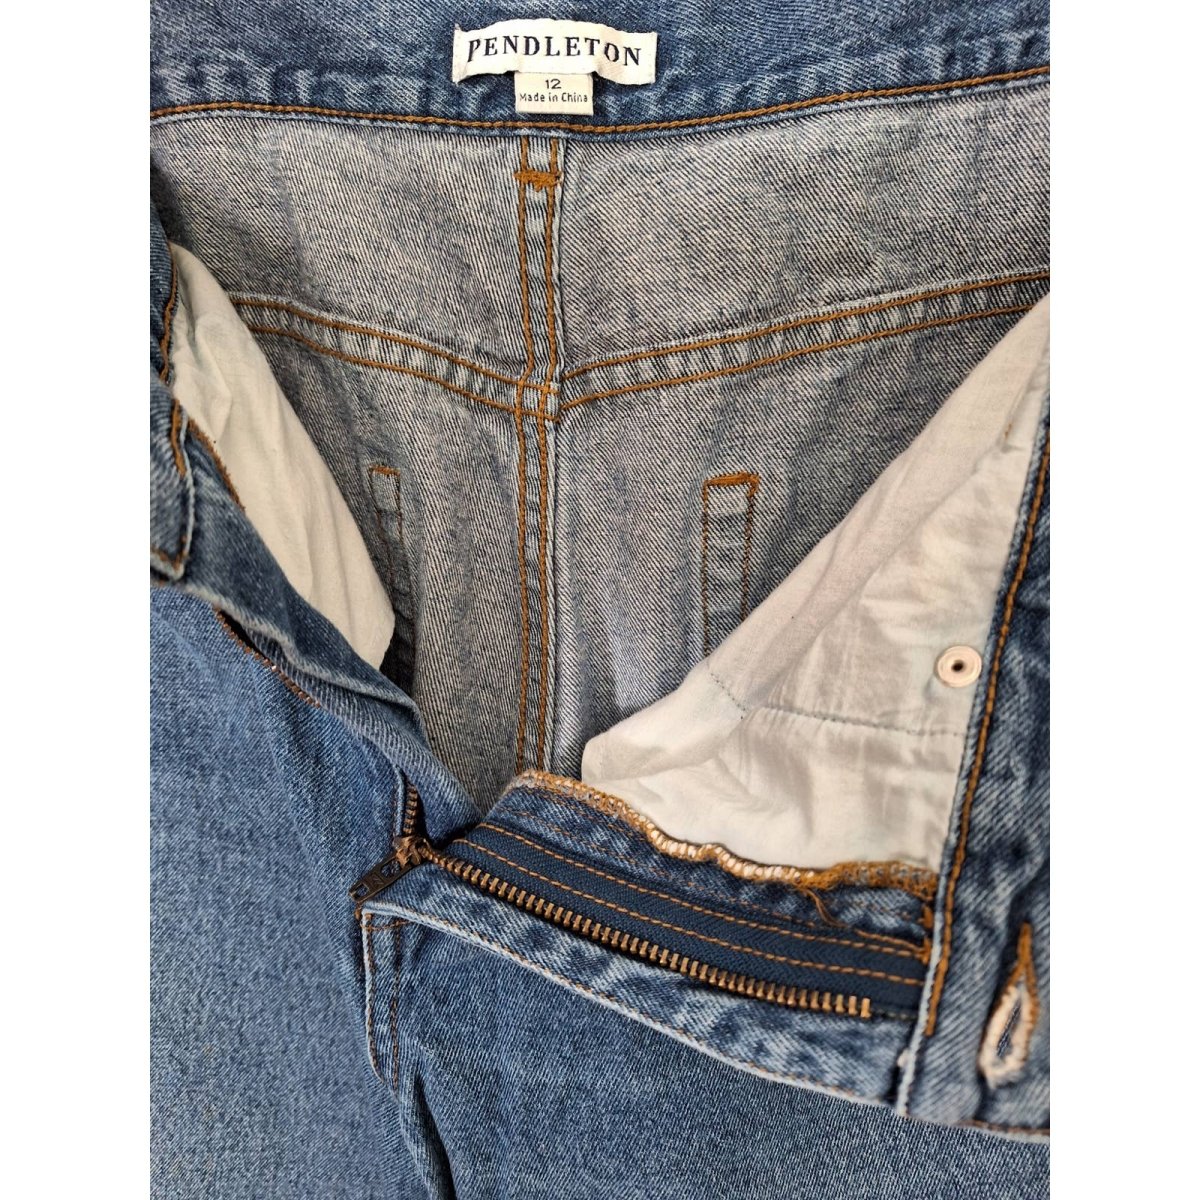 Vintage Pendleton All Cotton Jeans Size 12 Waist 34 - themallvintage The Mall Vintage